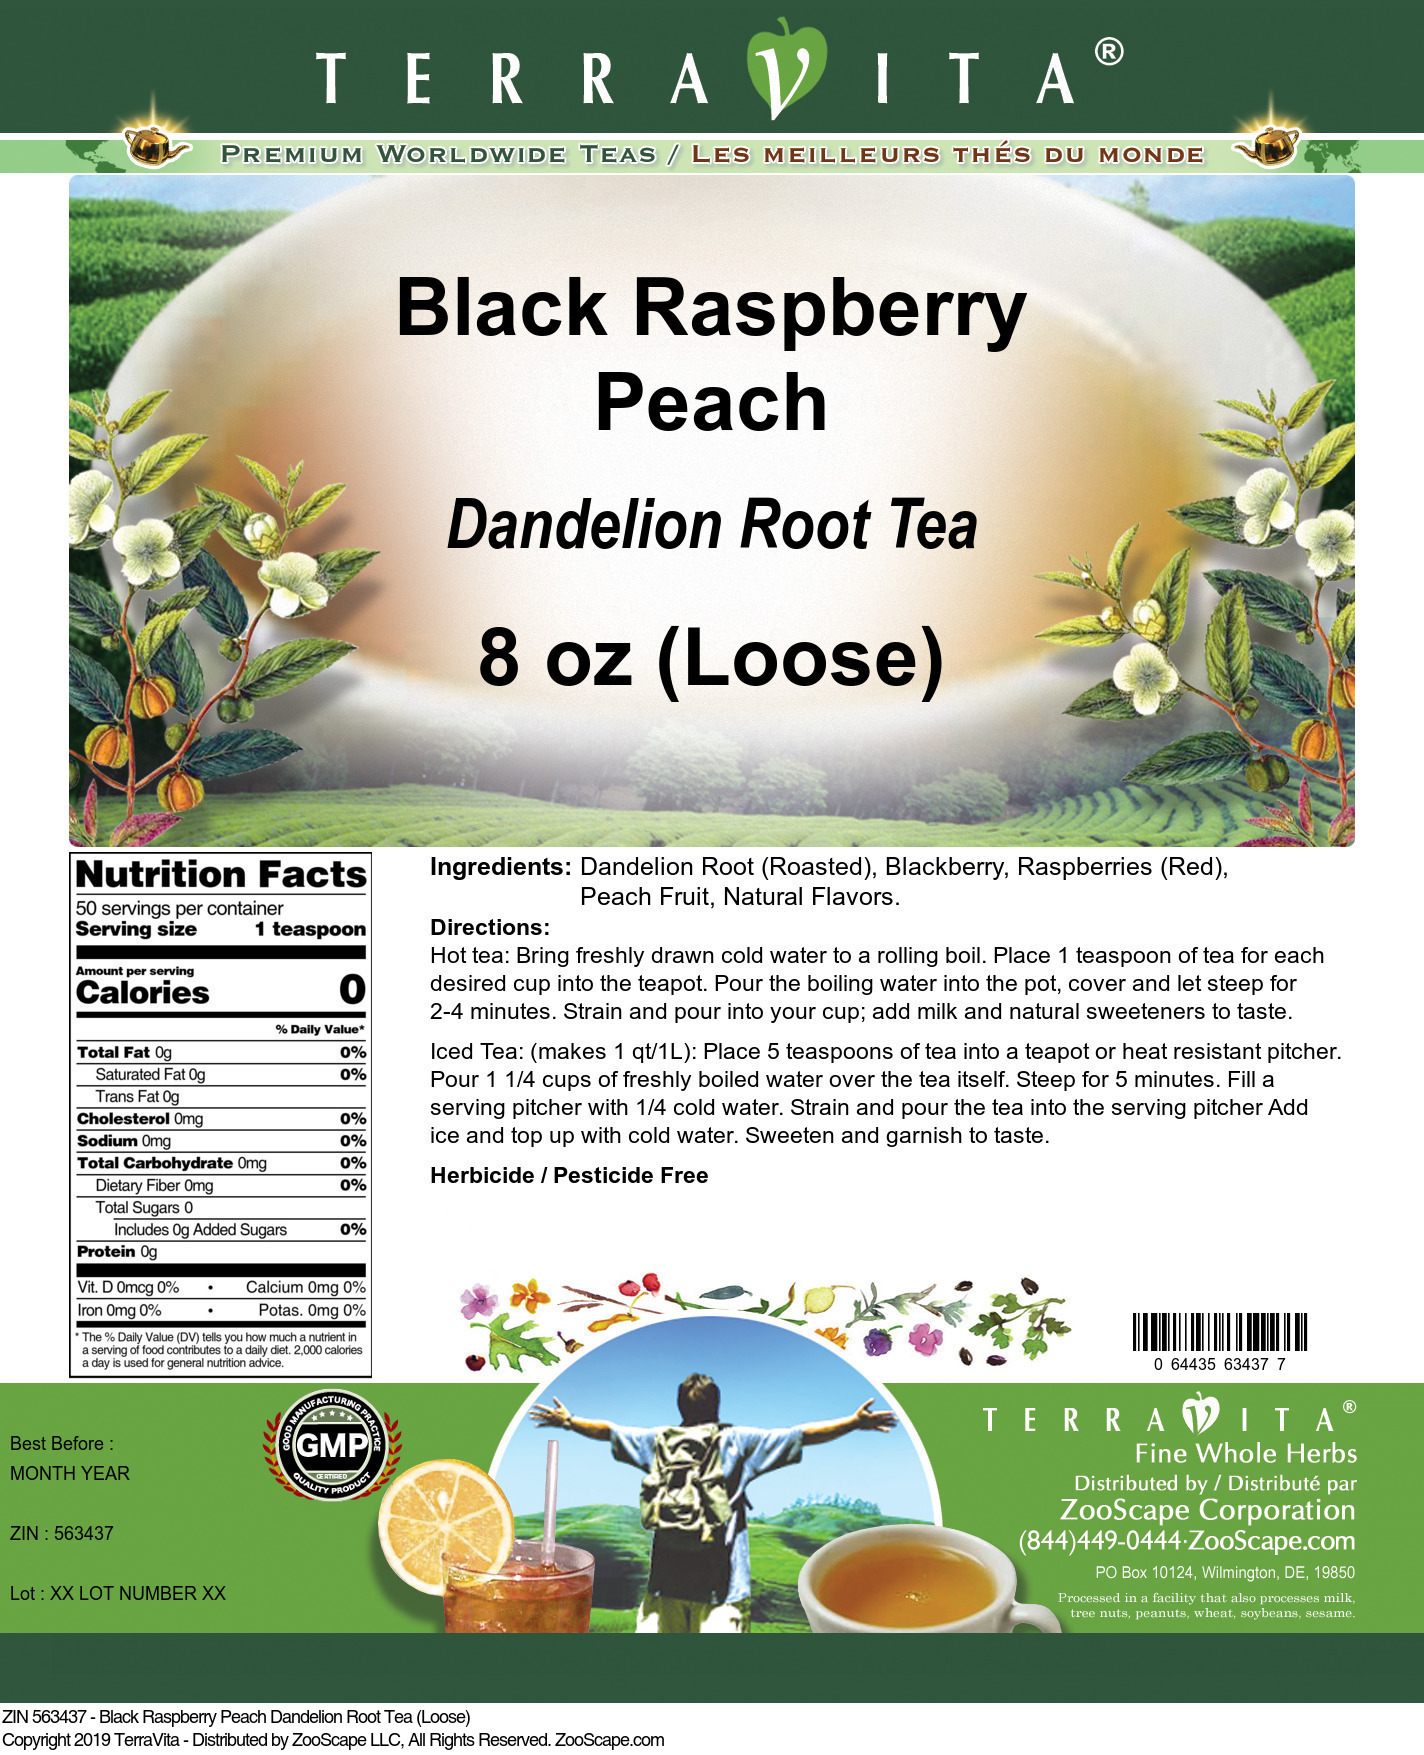 Black Raspberry Peach Dandelion Root Tea (Loose) - Label